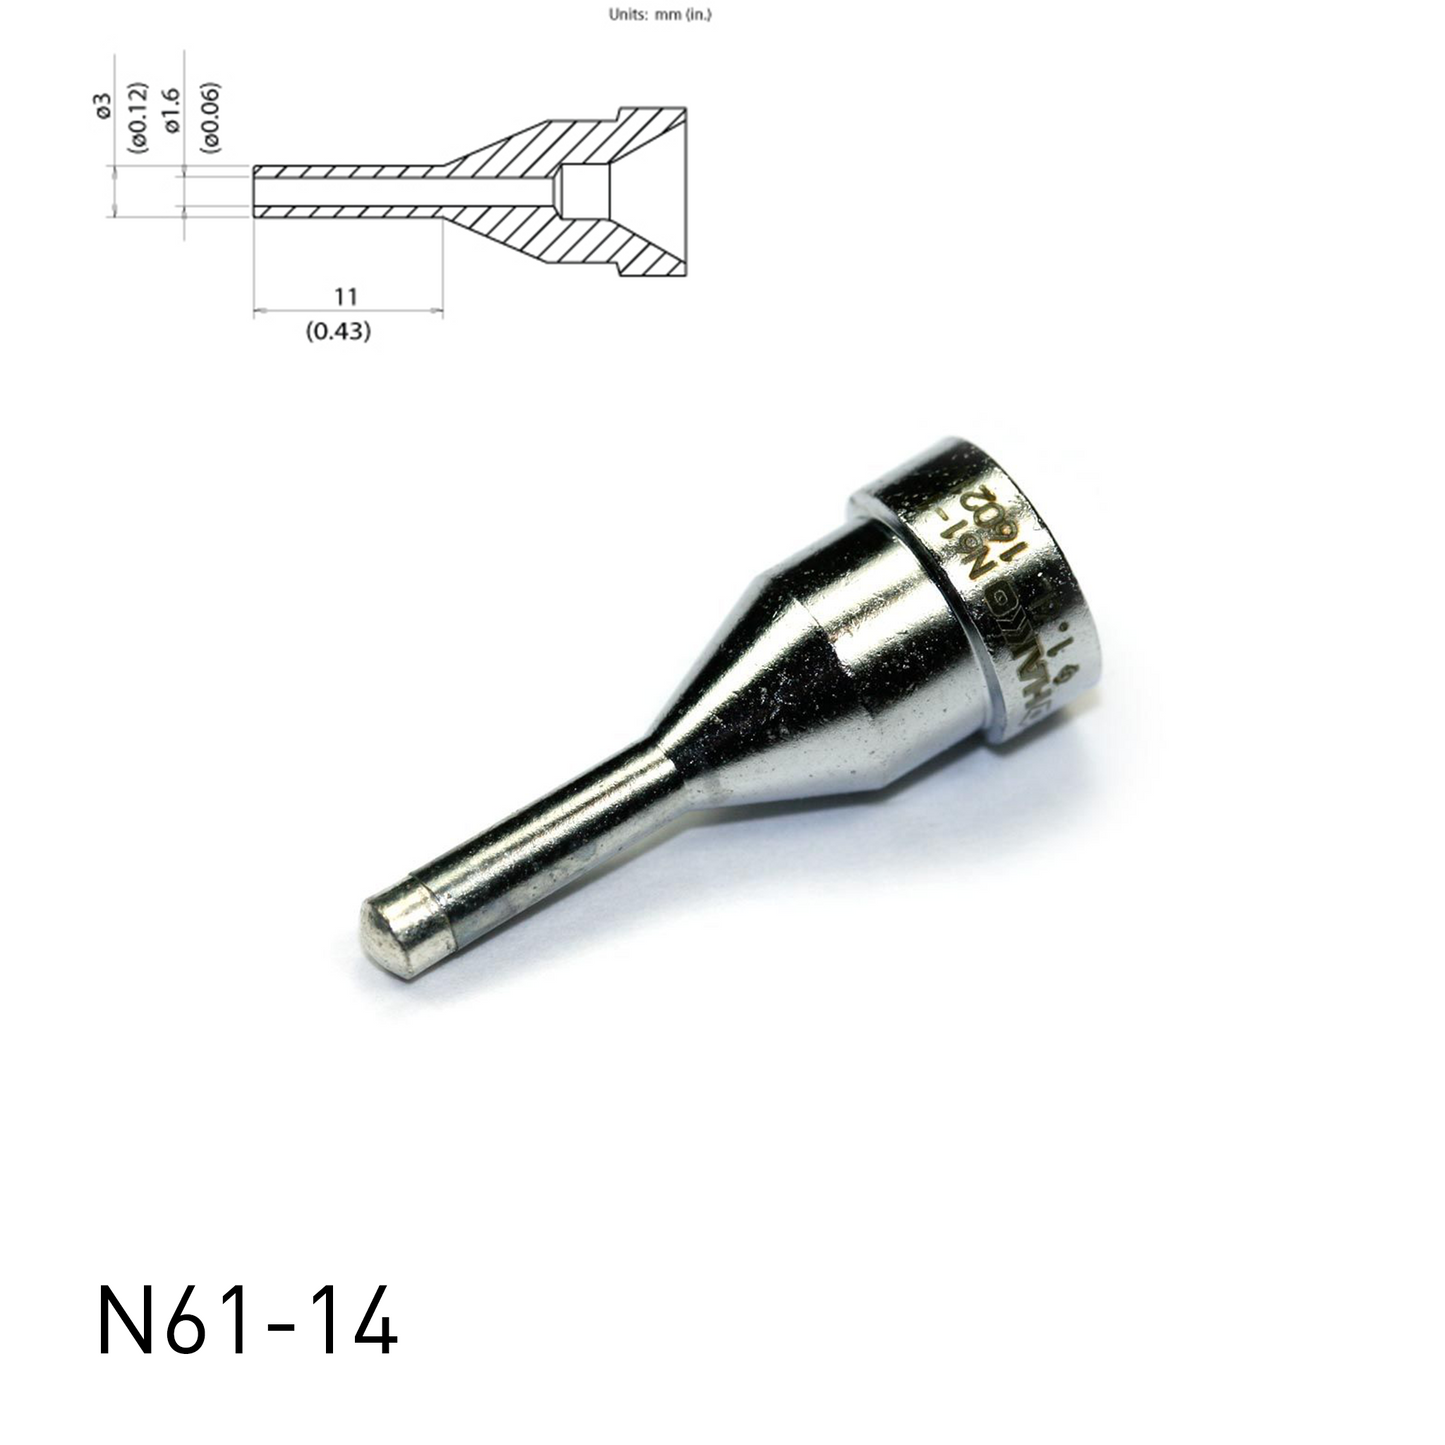 Hakko Products Pte Ltd_ N61-14 Desoldering Nozzle_ Nozzles_ Hakko Products